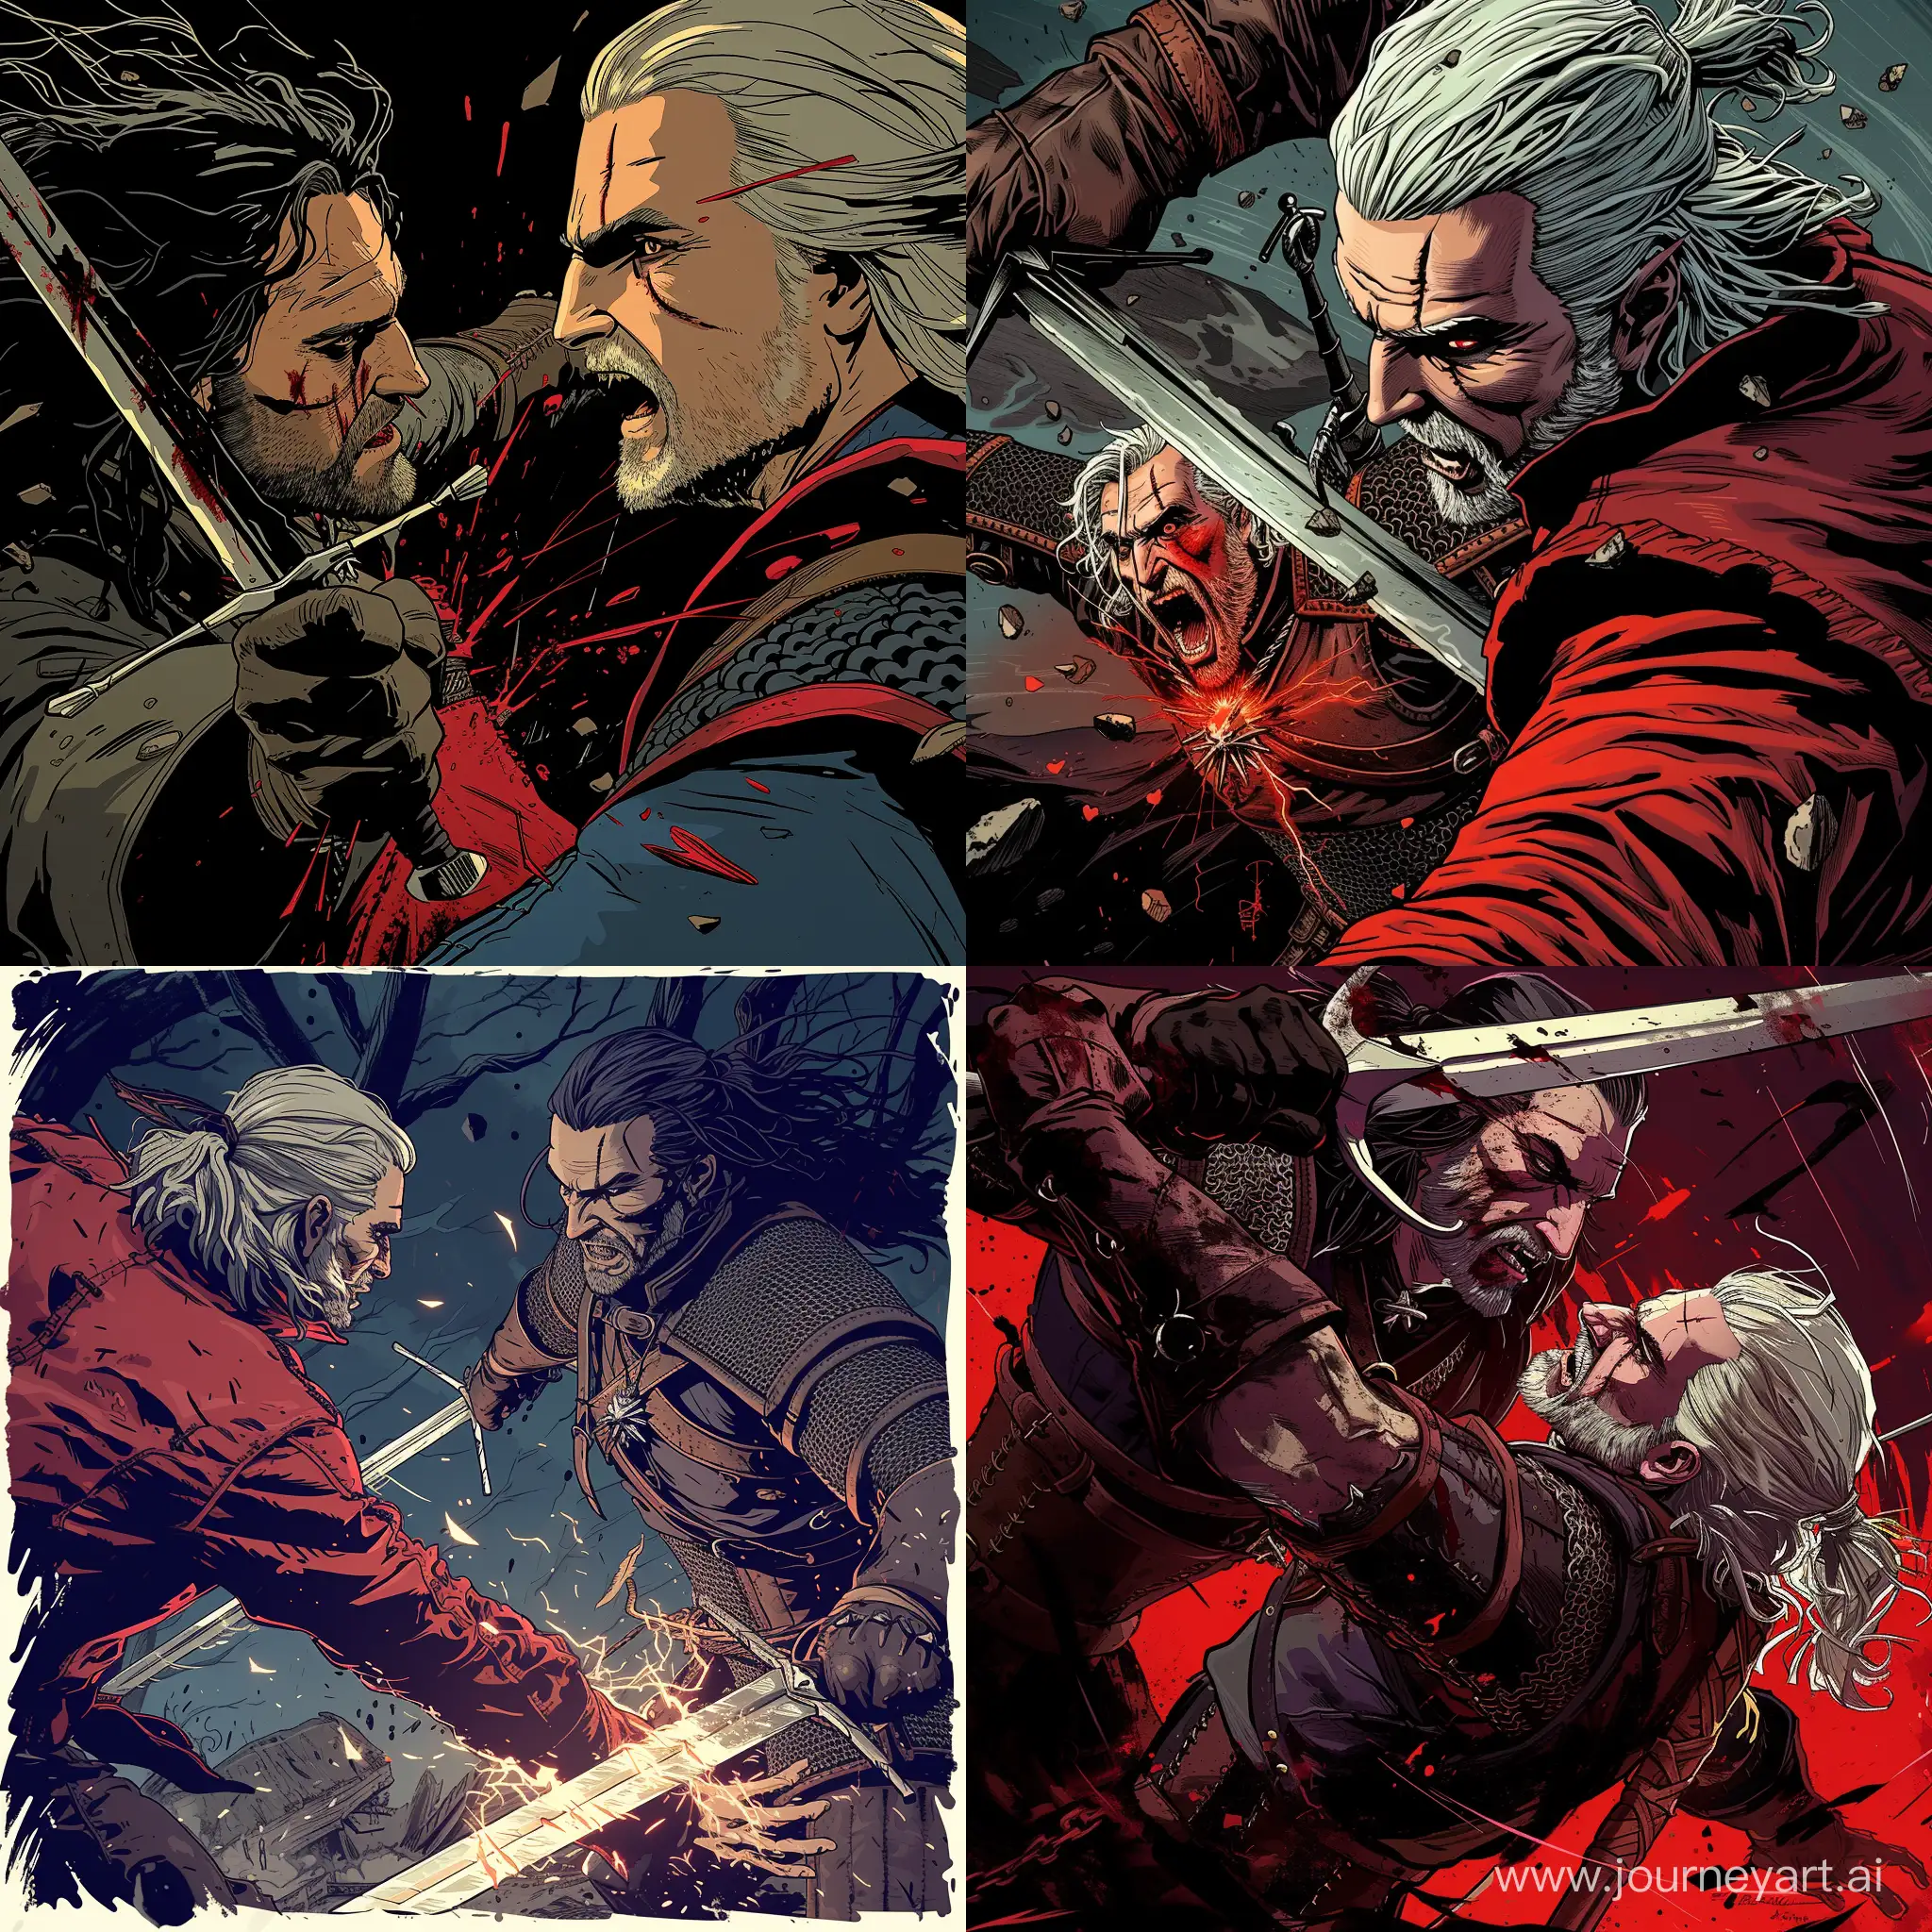 Epic-Battle-Geralt-of-Rivia-vs-Alucard-in-Stylized-Comic-Book-Art